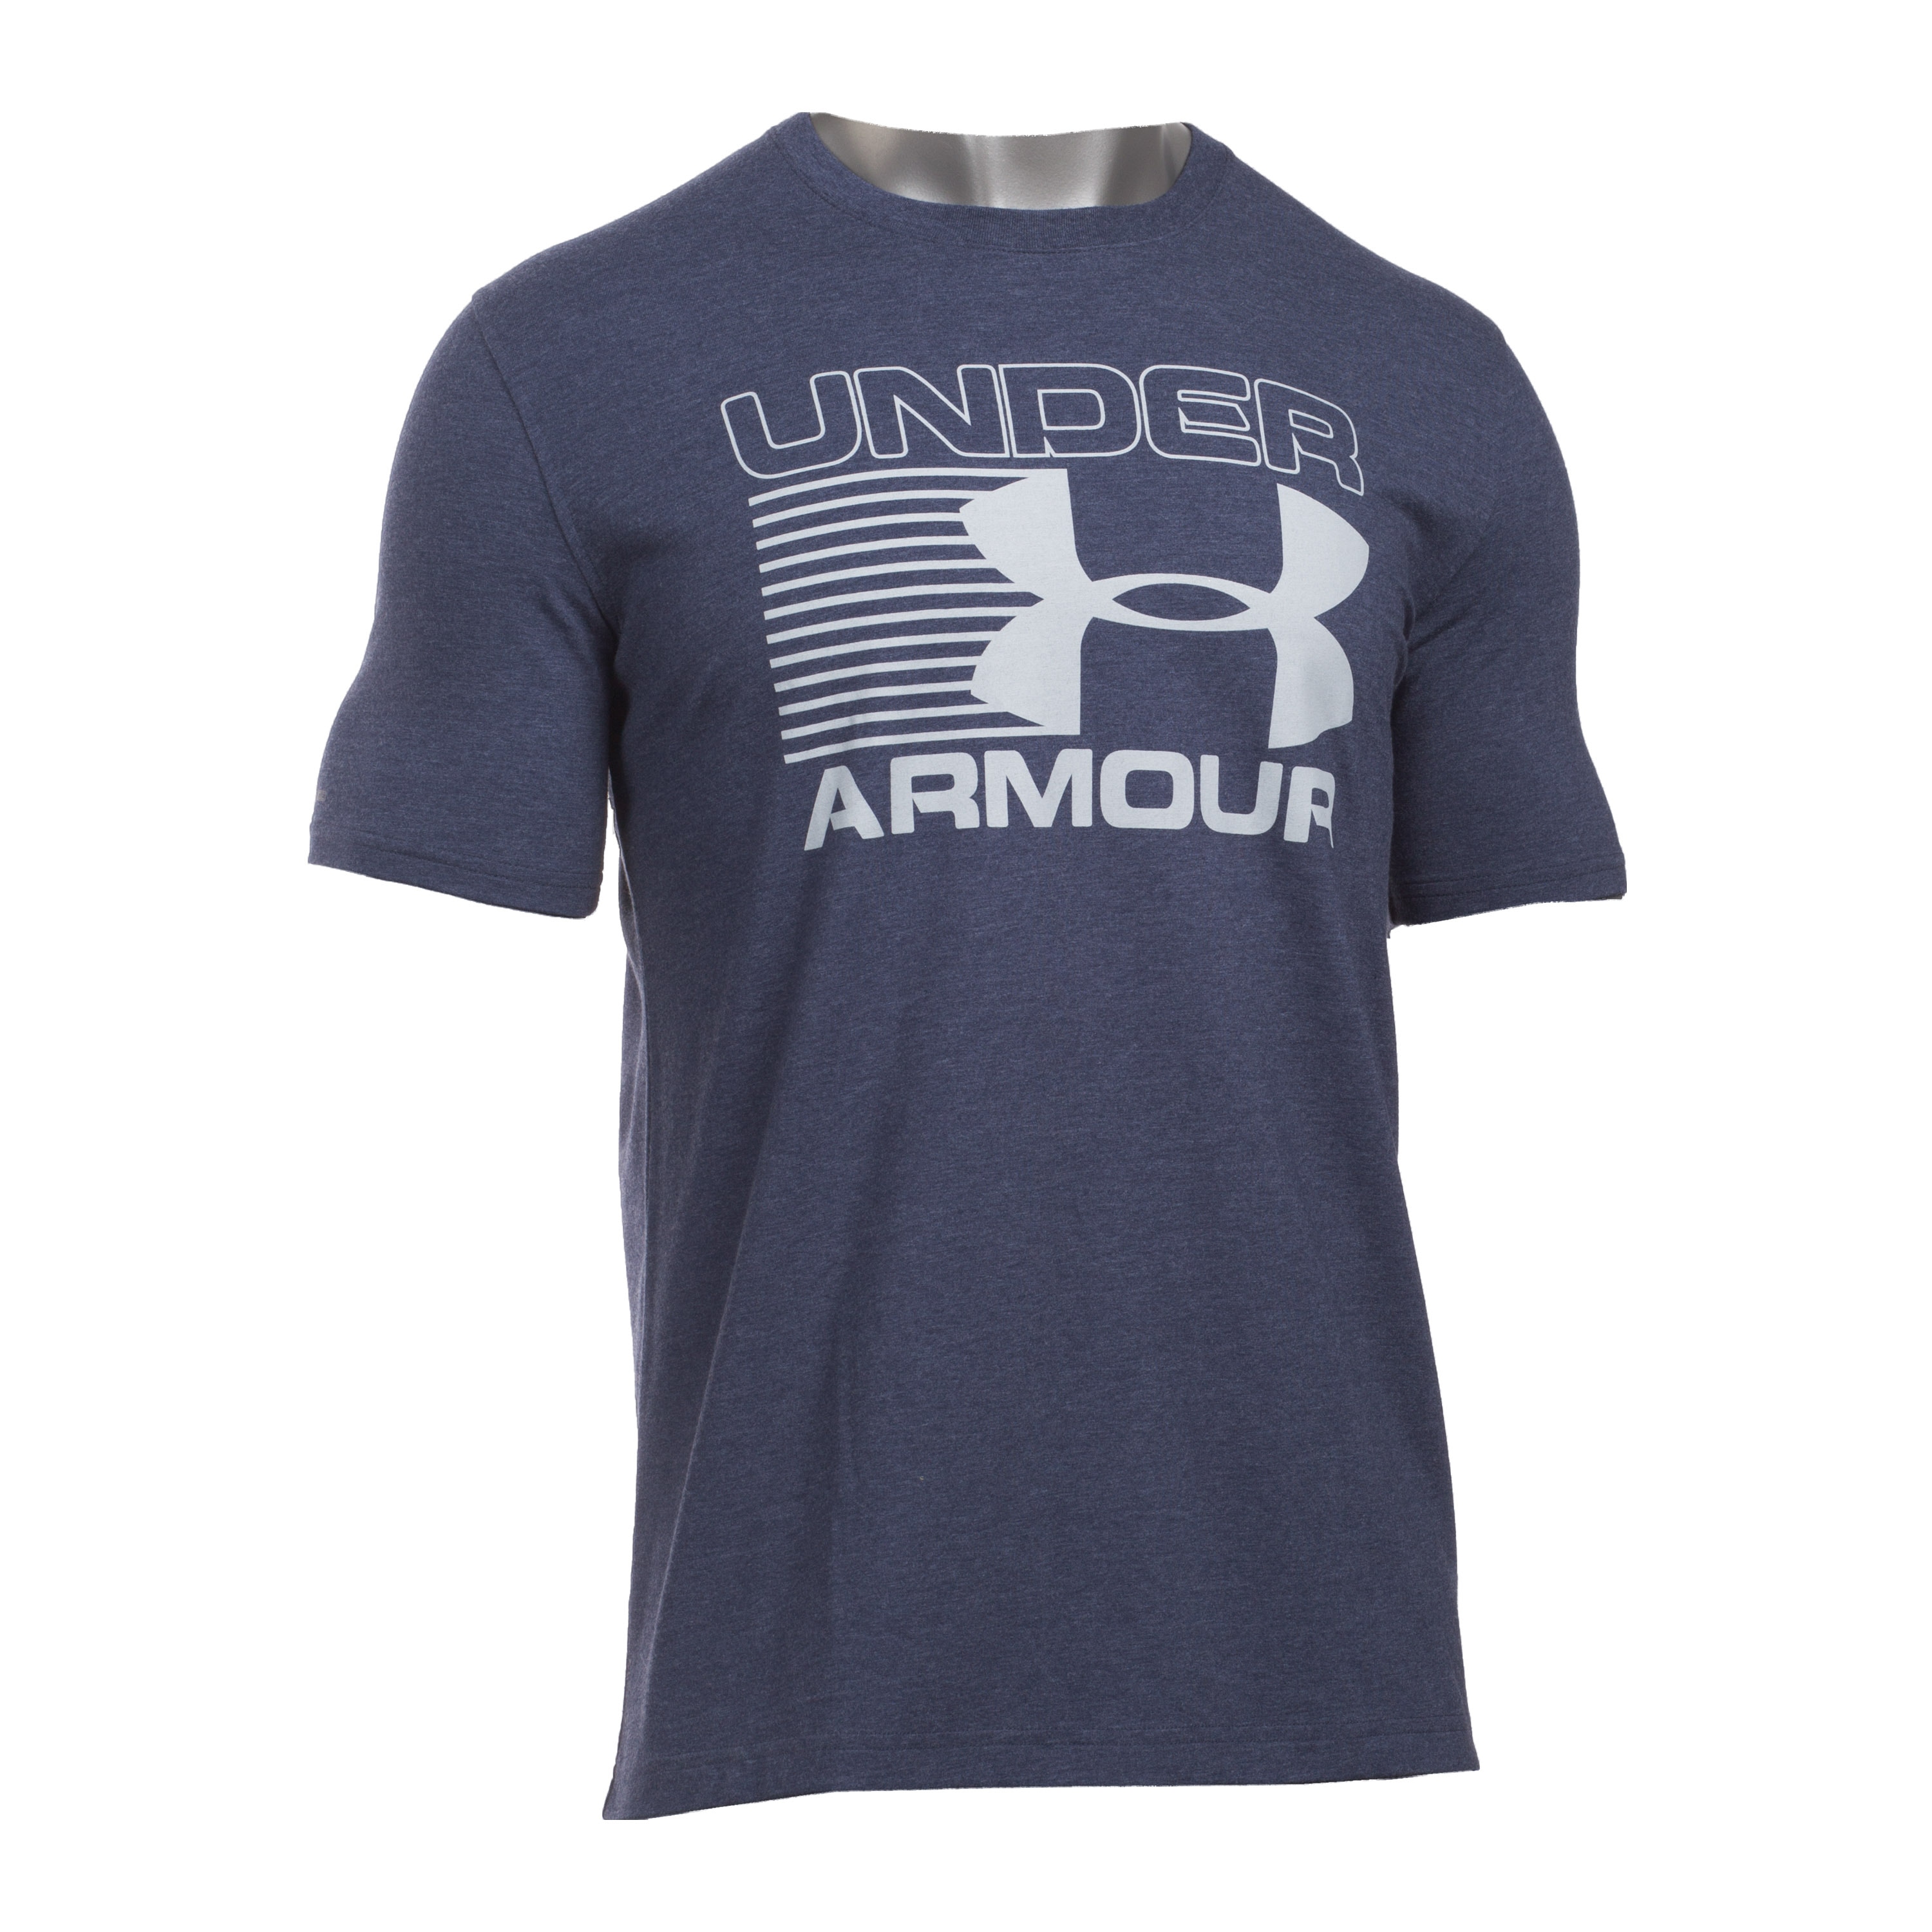 navy blue under armour shirt